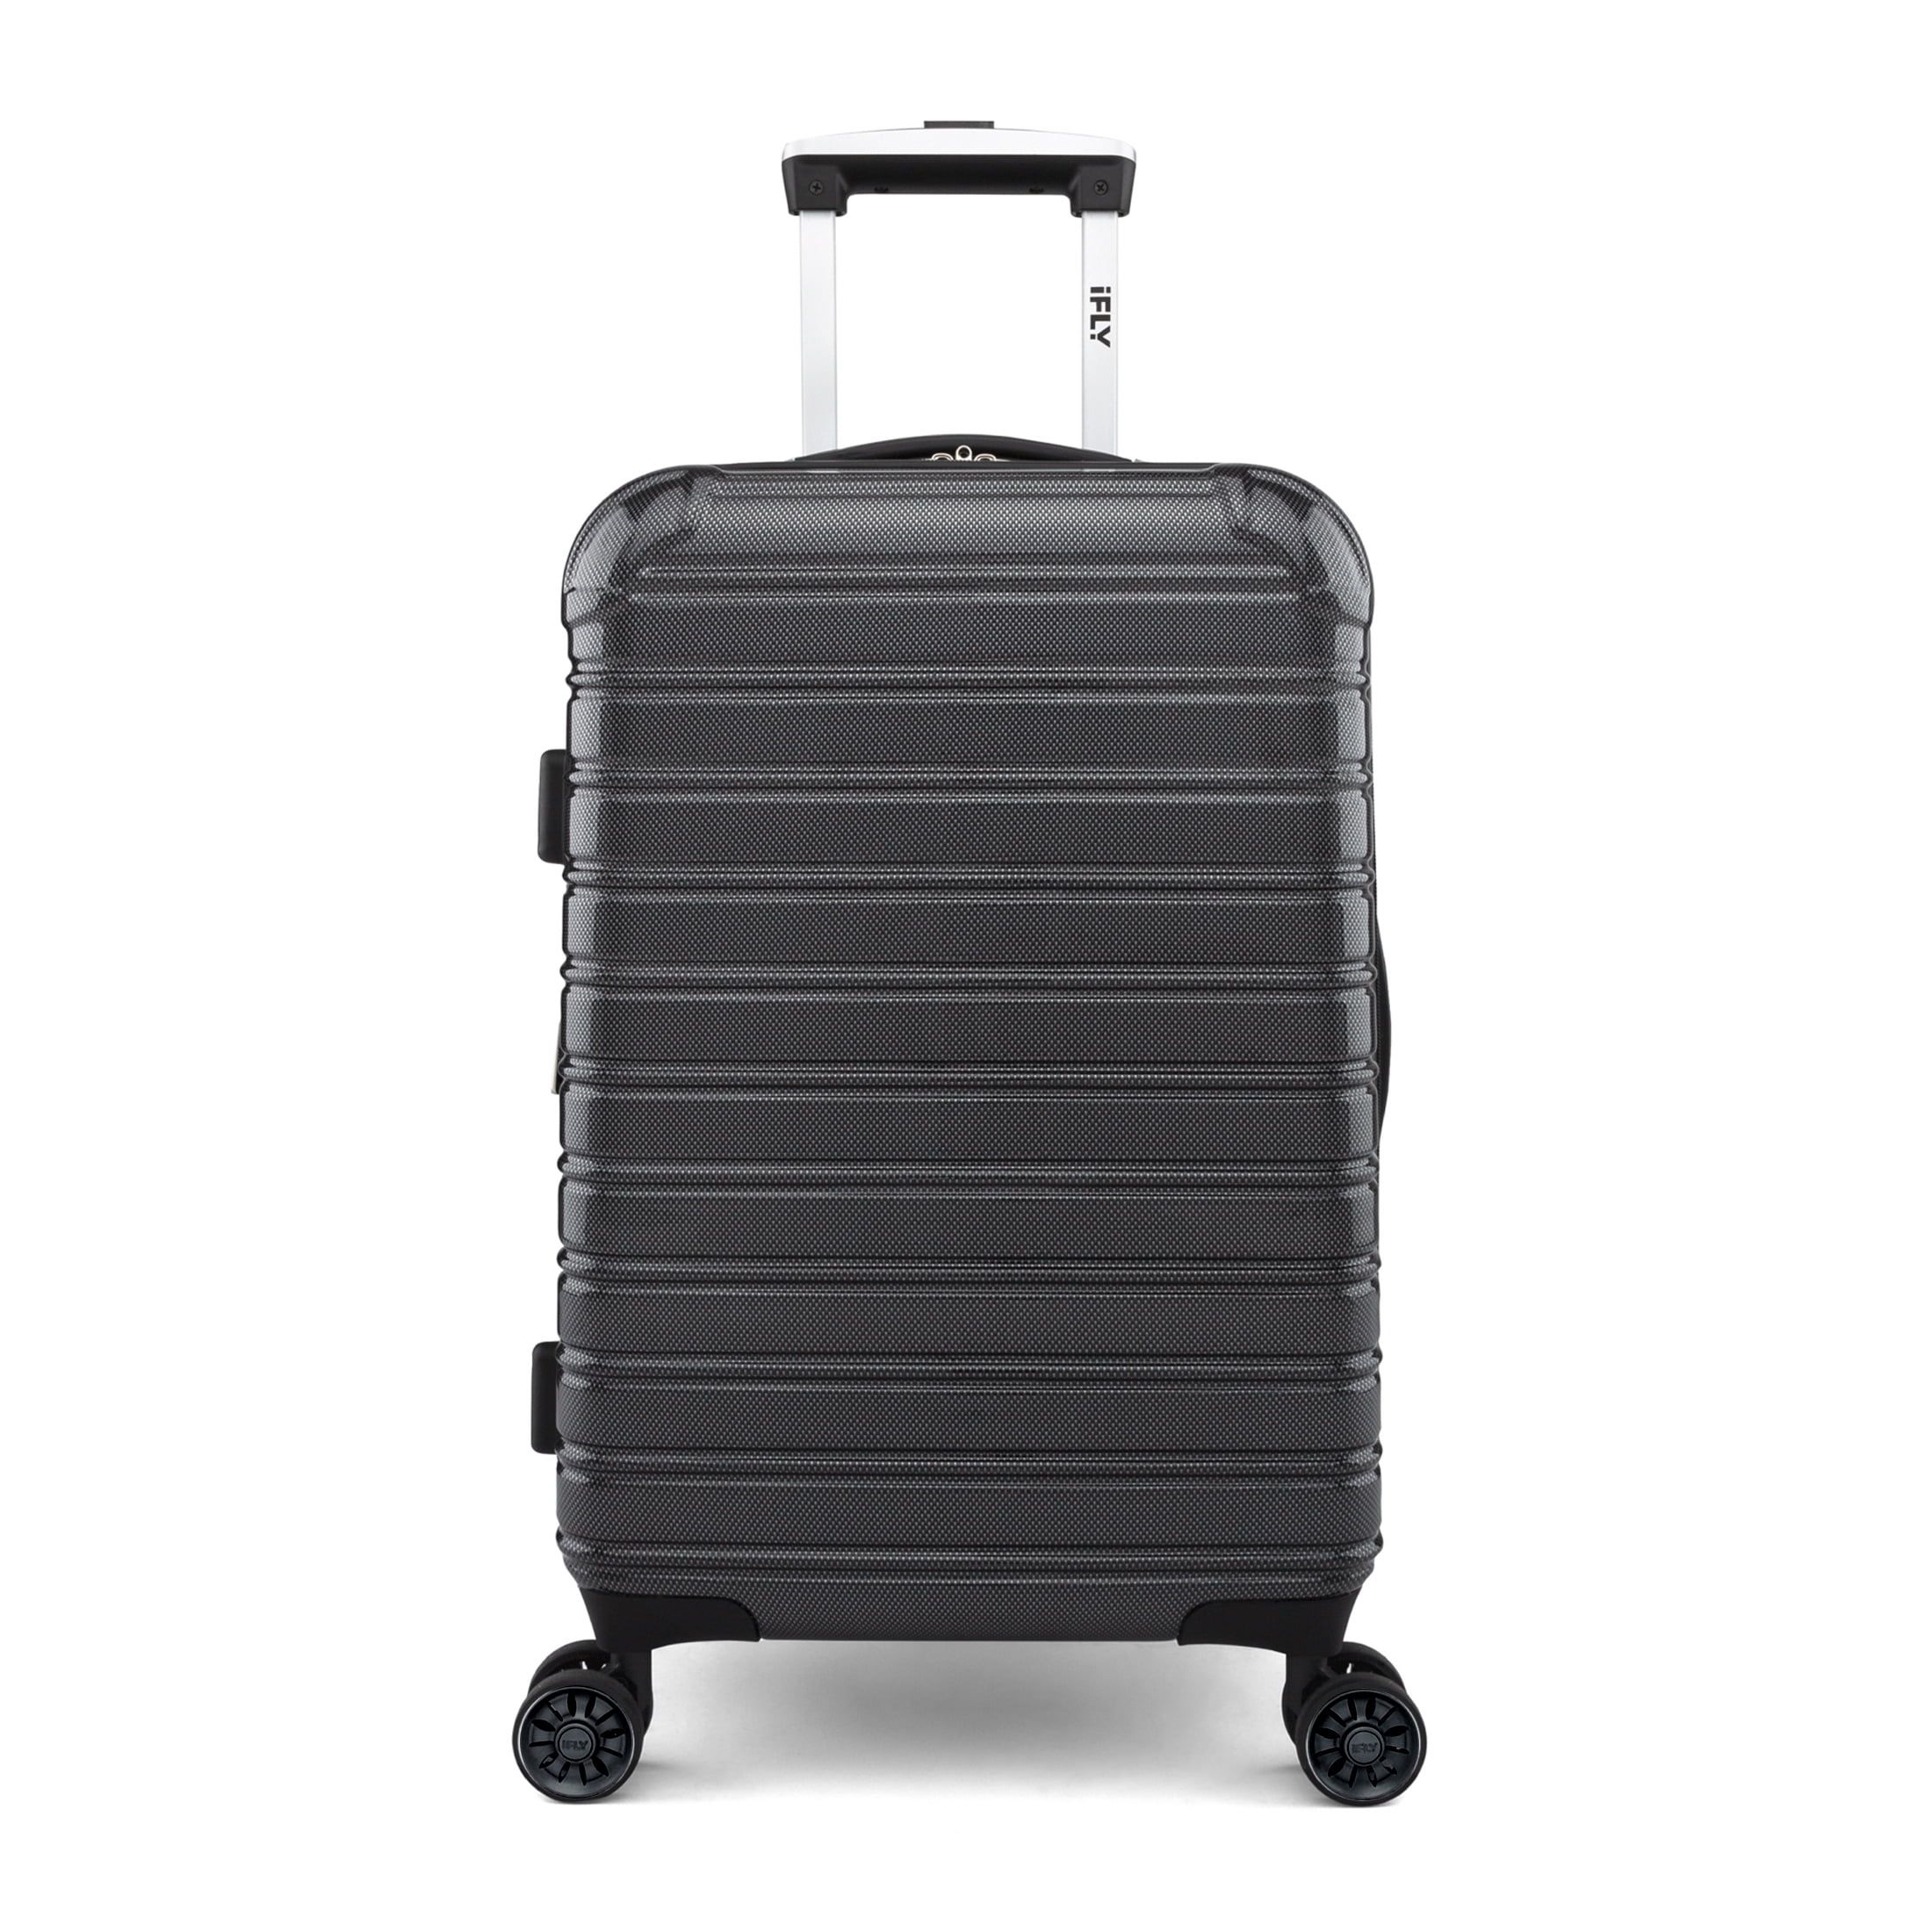 iFLY Hardside Fibertech Luggage 20" Carry-on Luggage, Black | Walmart (US)